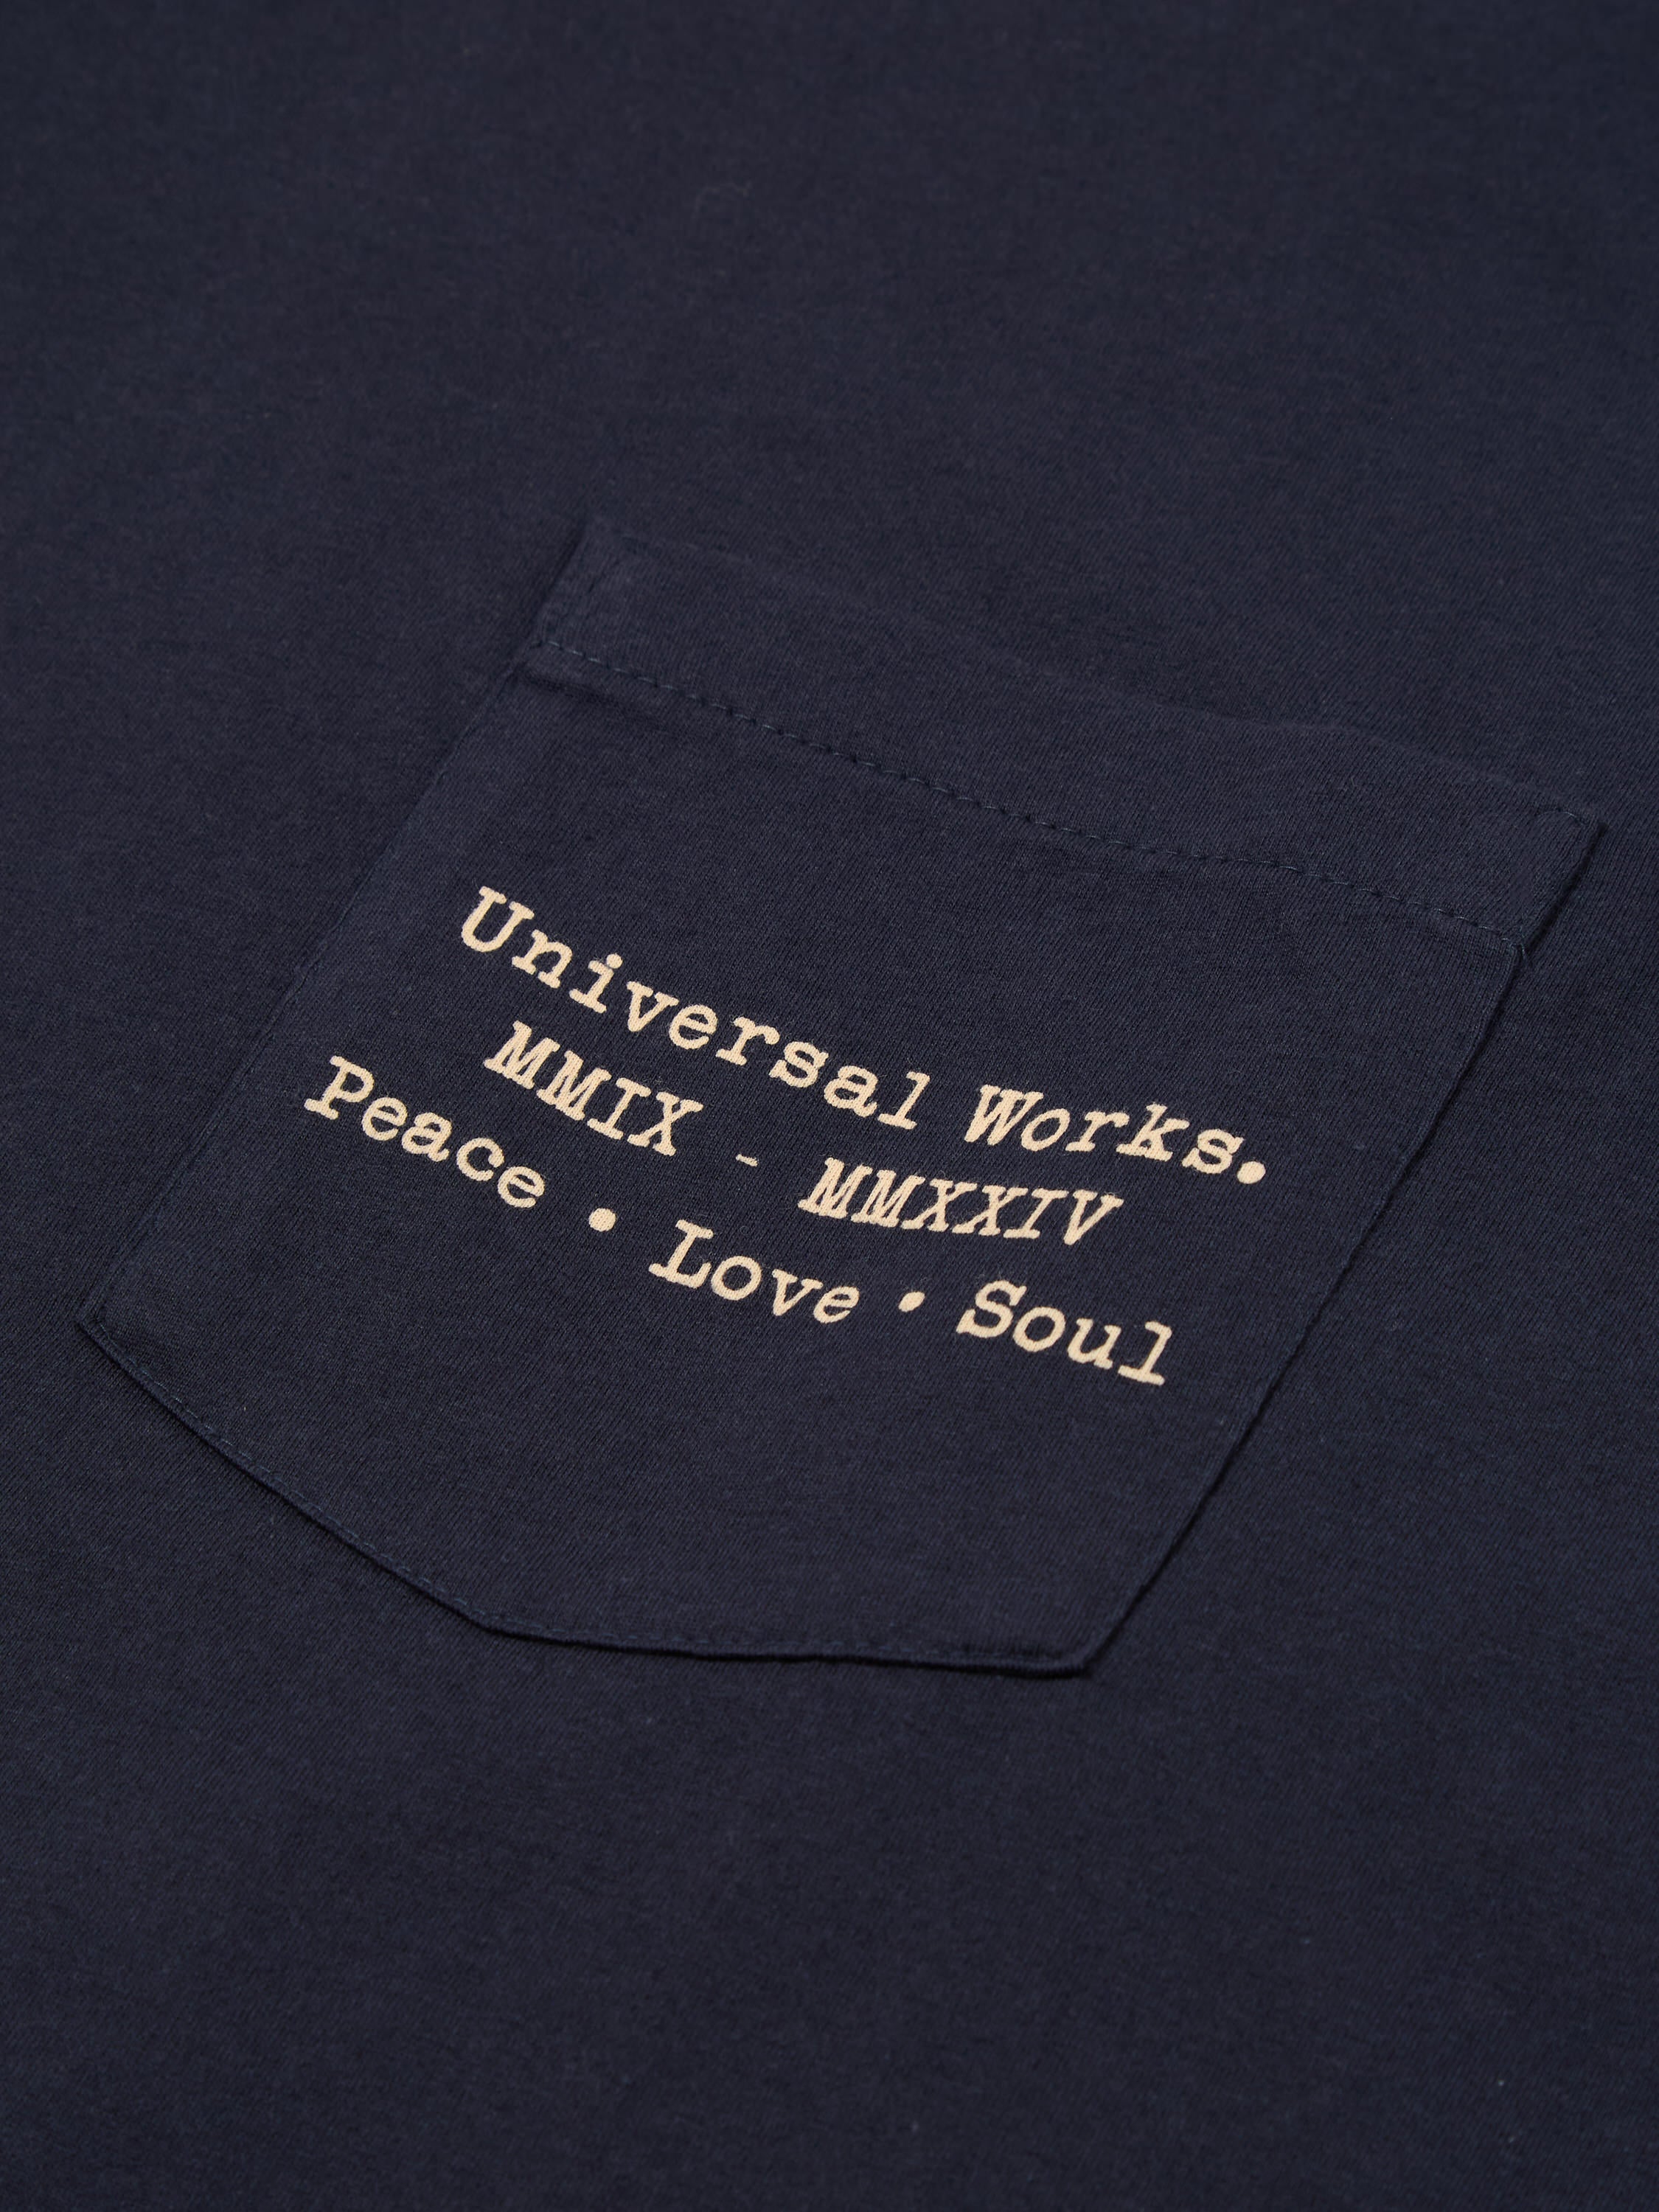 Universal Works XV Tee Shirt in Navy Print Jersey